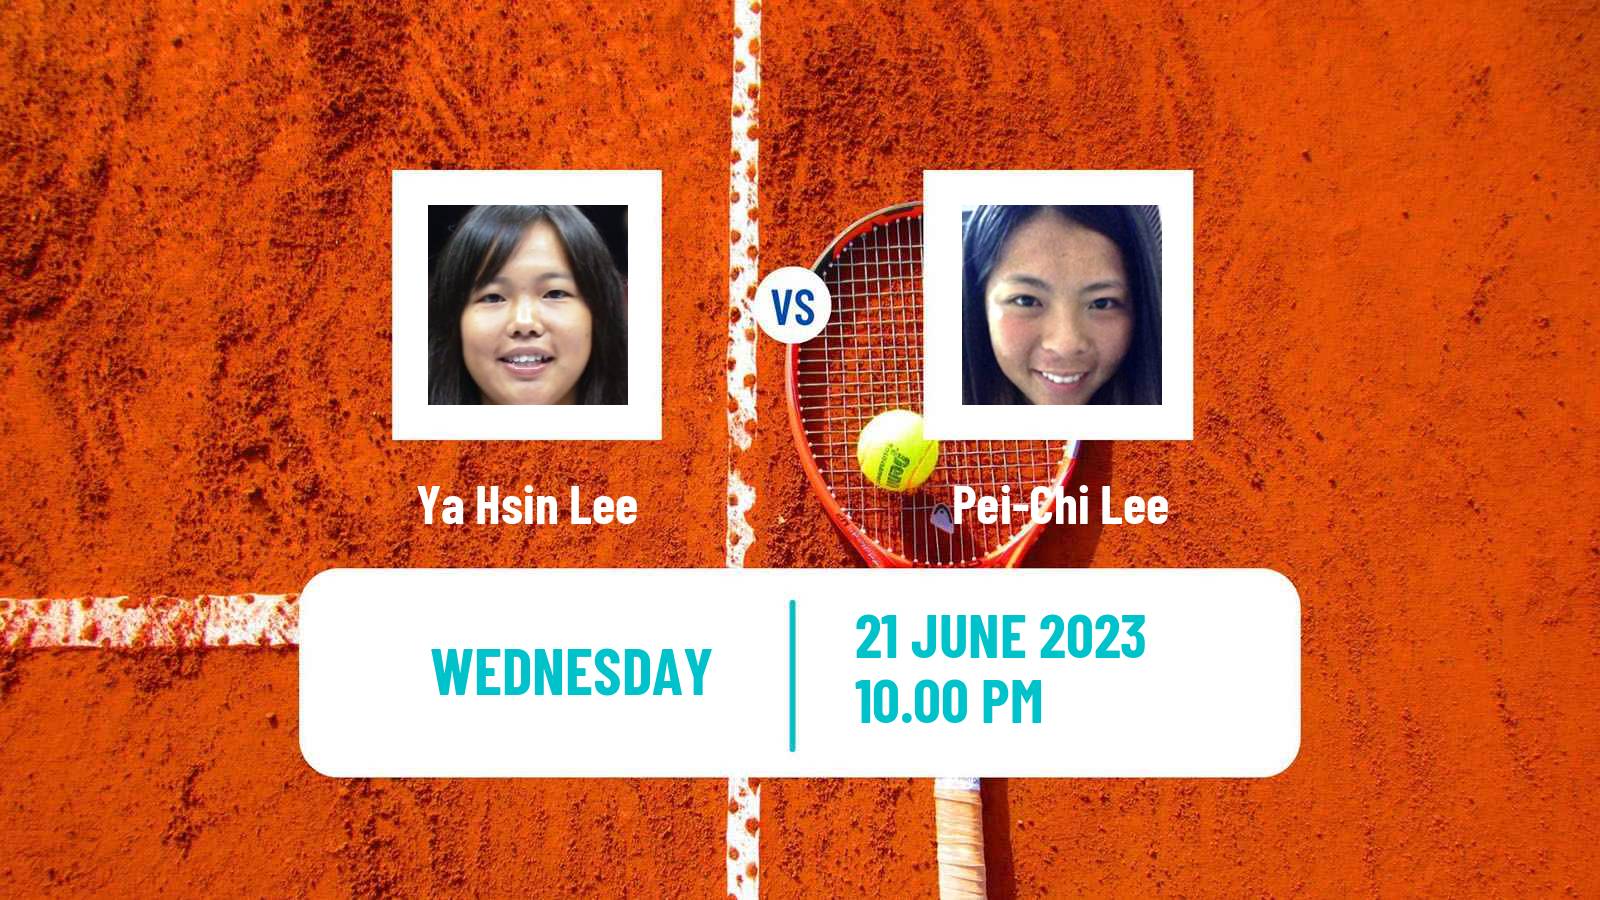 Tennis ITF W25 Tainan 2 Women Ya Hsin Lee - Pei-Chi Lee